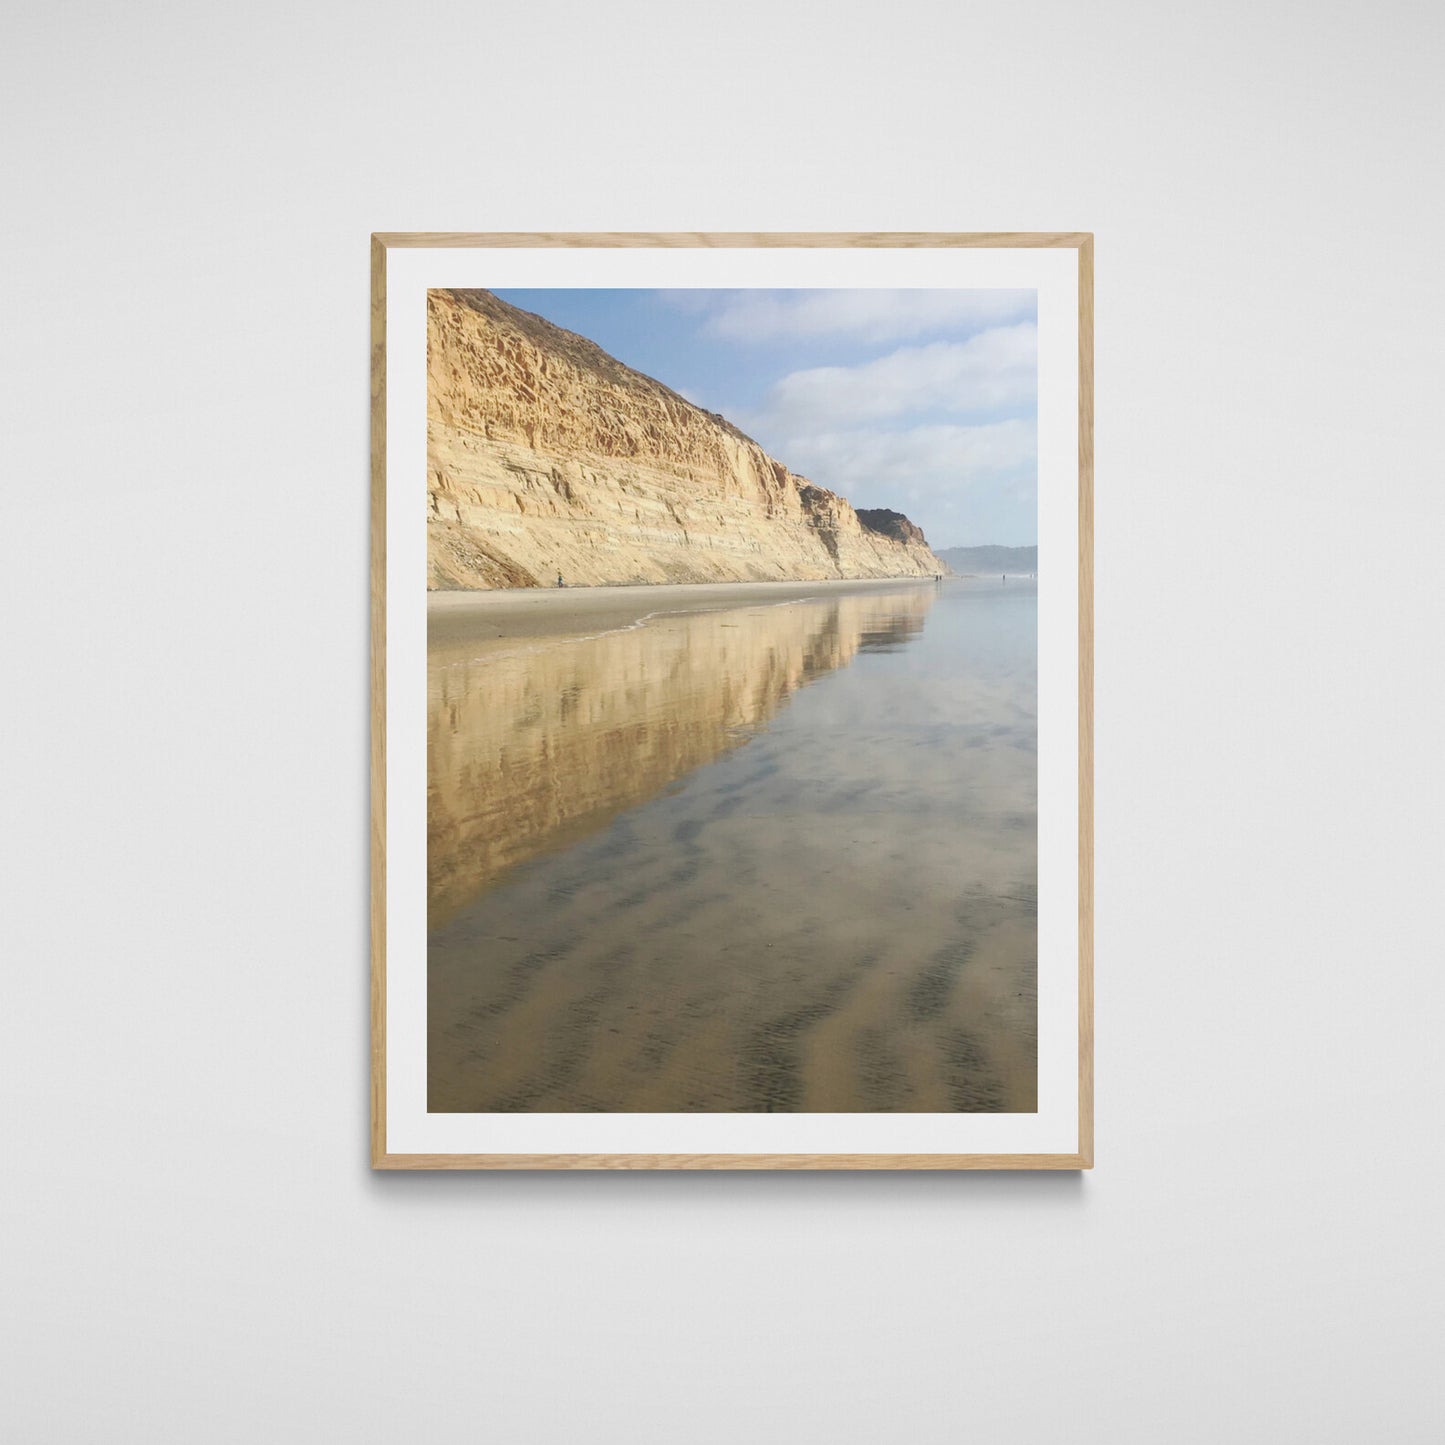 Reflections Print, La Jolla Cliffs, Original Archival Photography